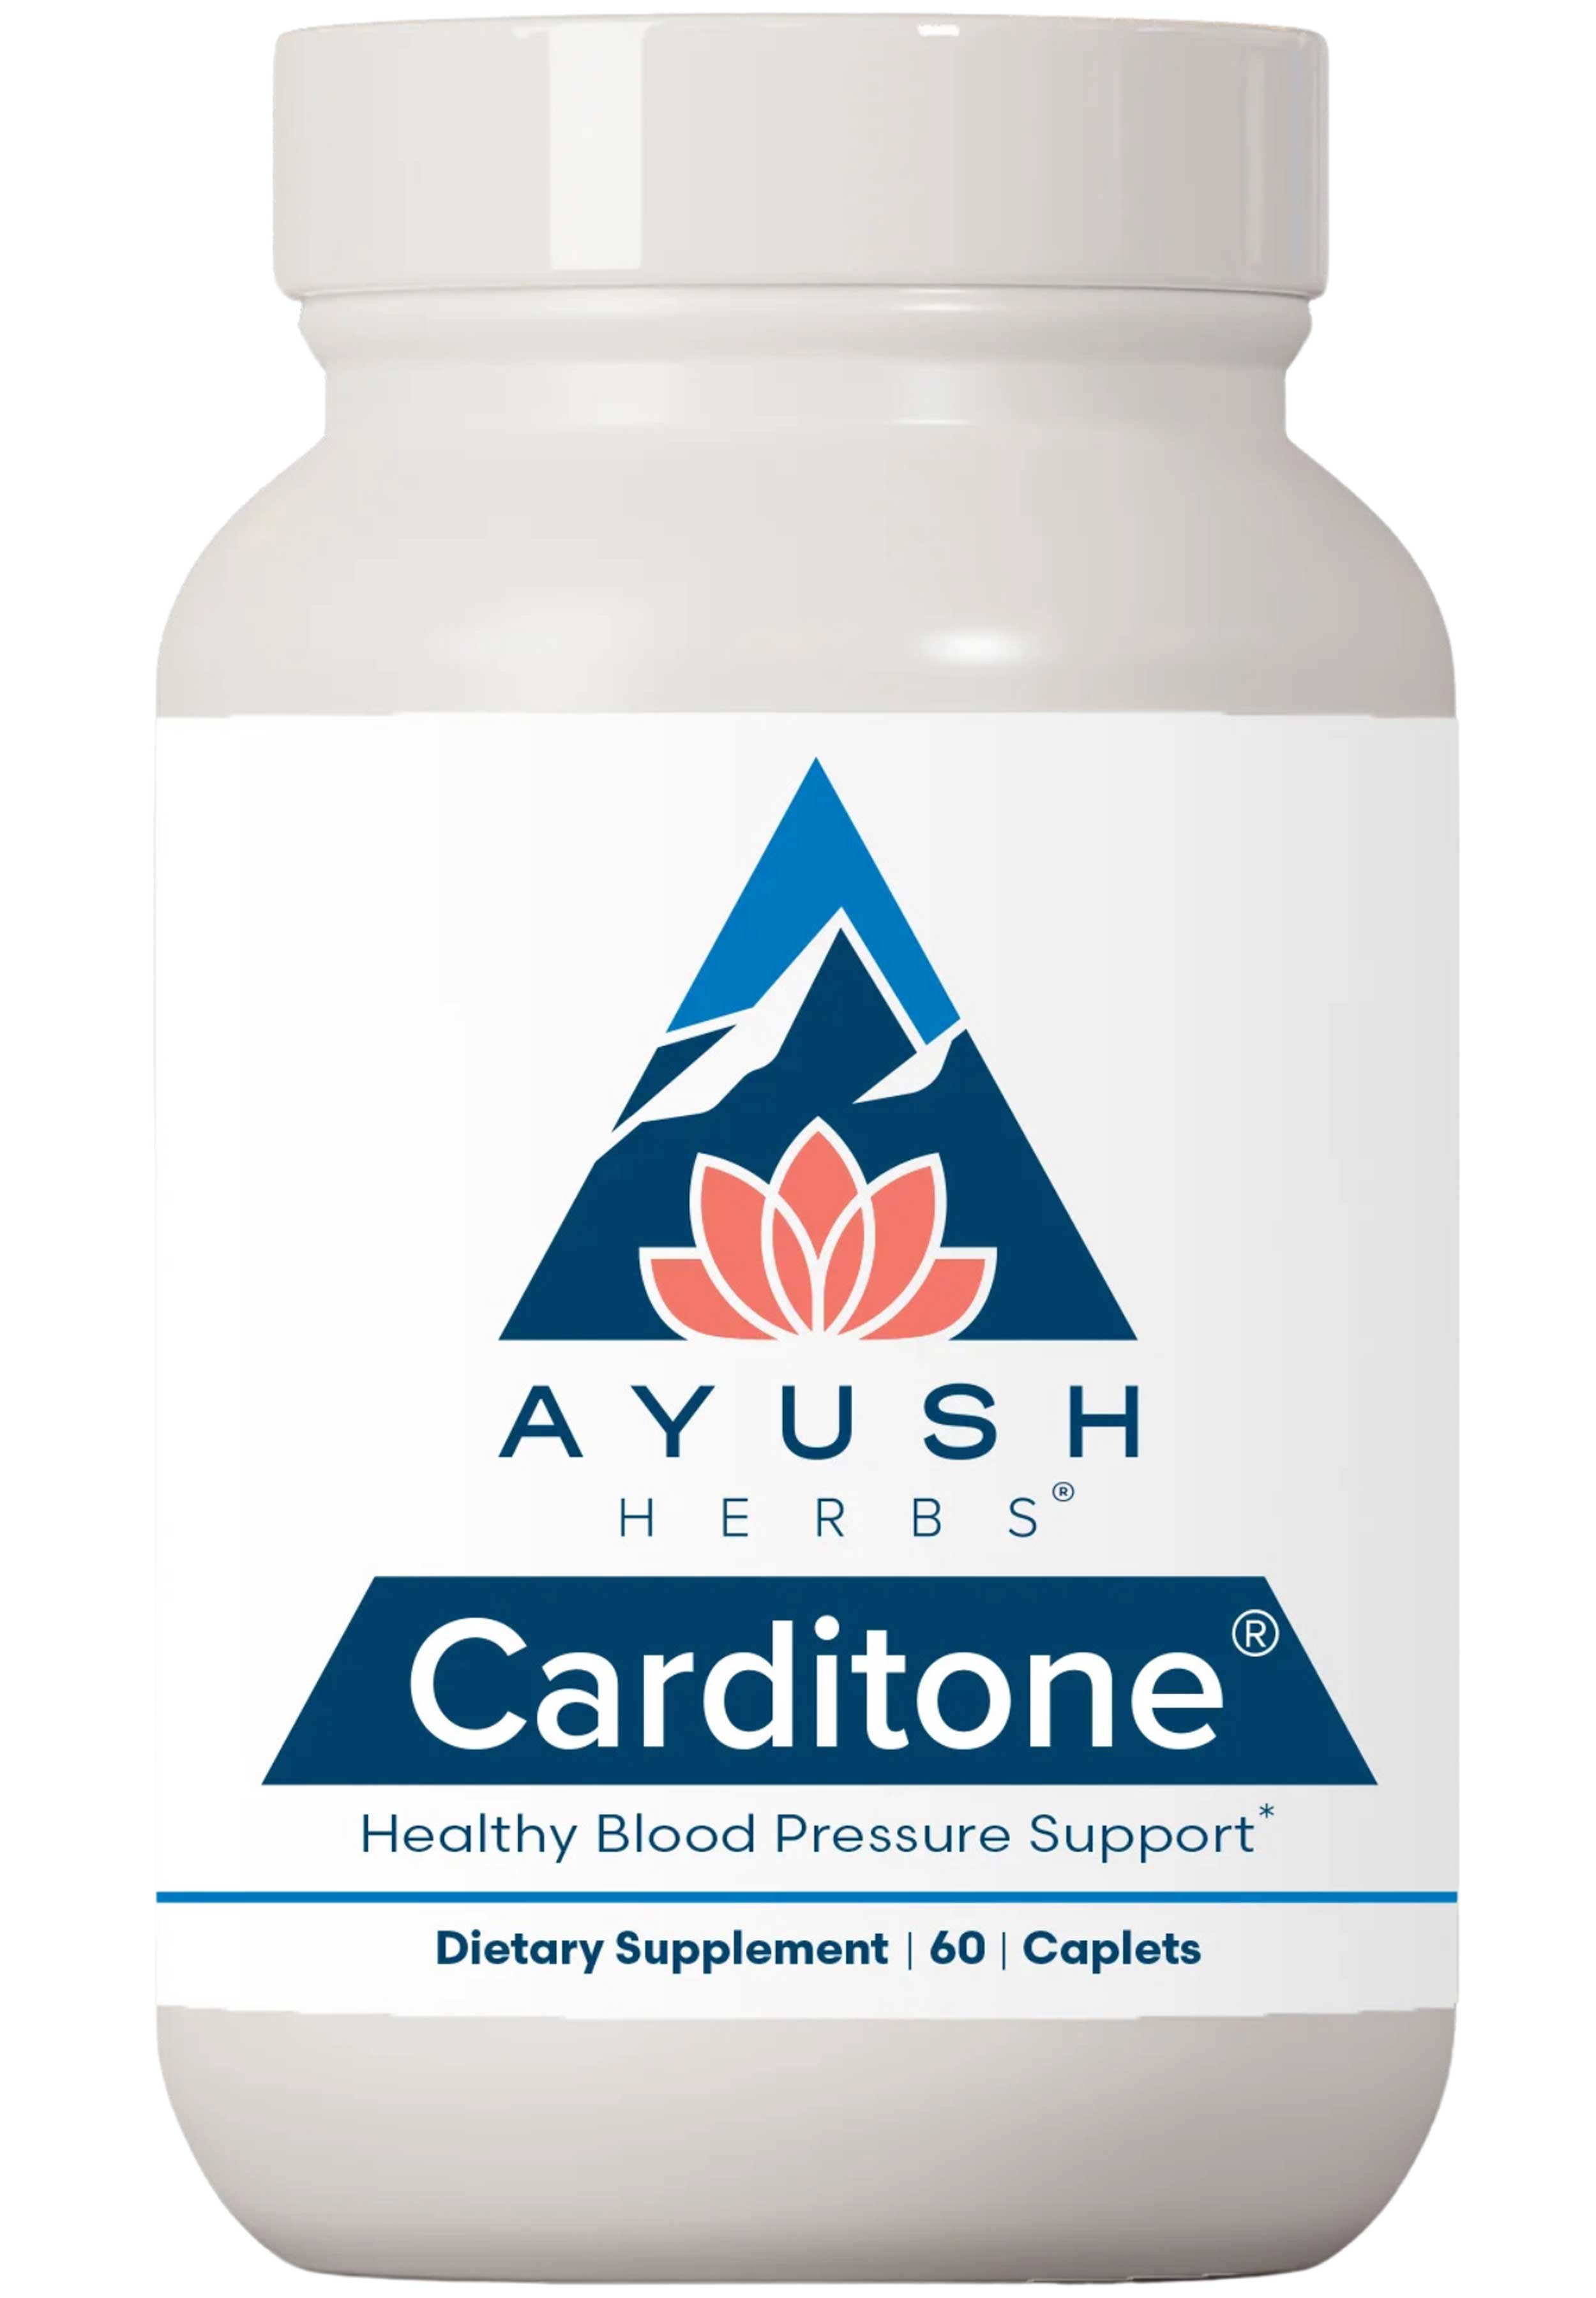 Ayush Herbs Carditone